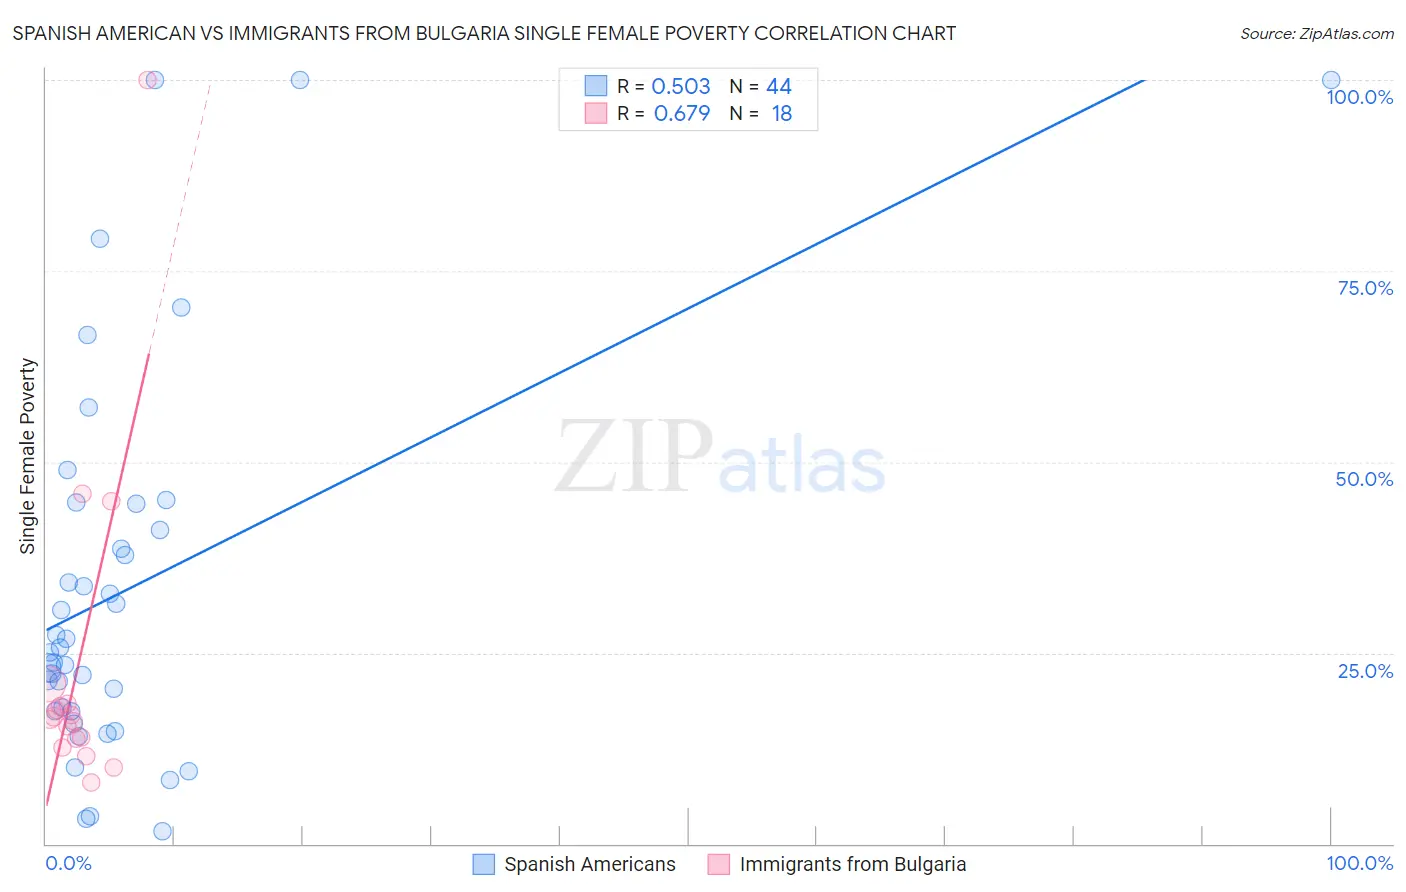 Spanish American vs Immigrants from Bulgaria Single Female Poverty